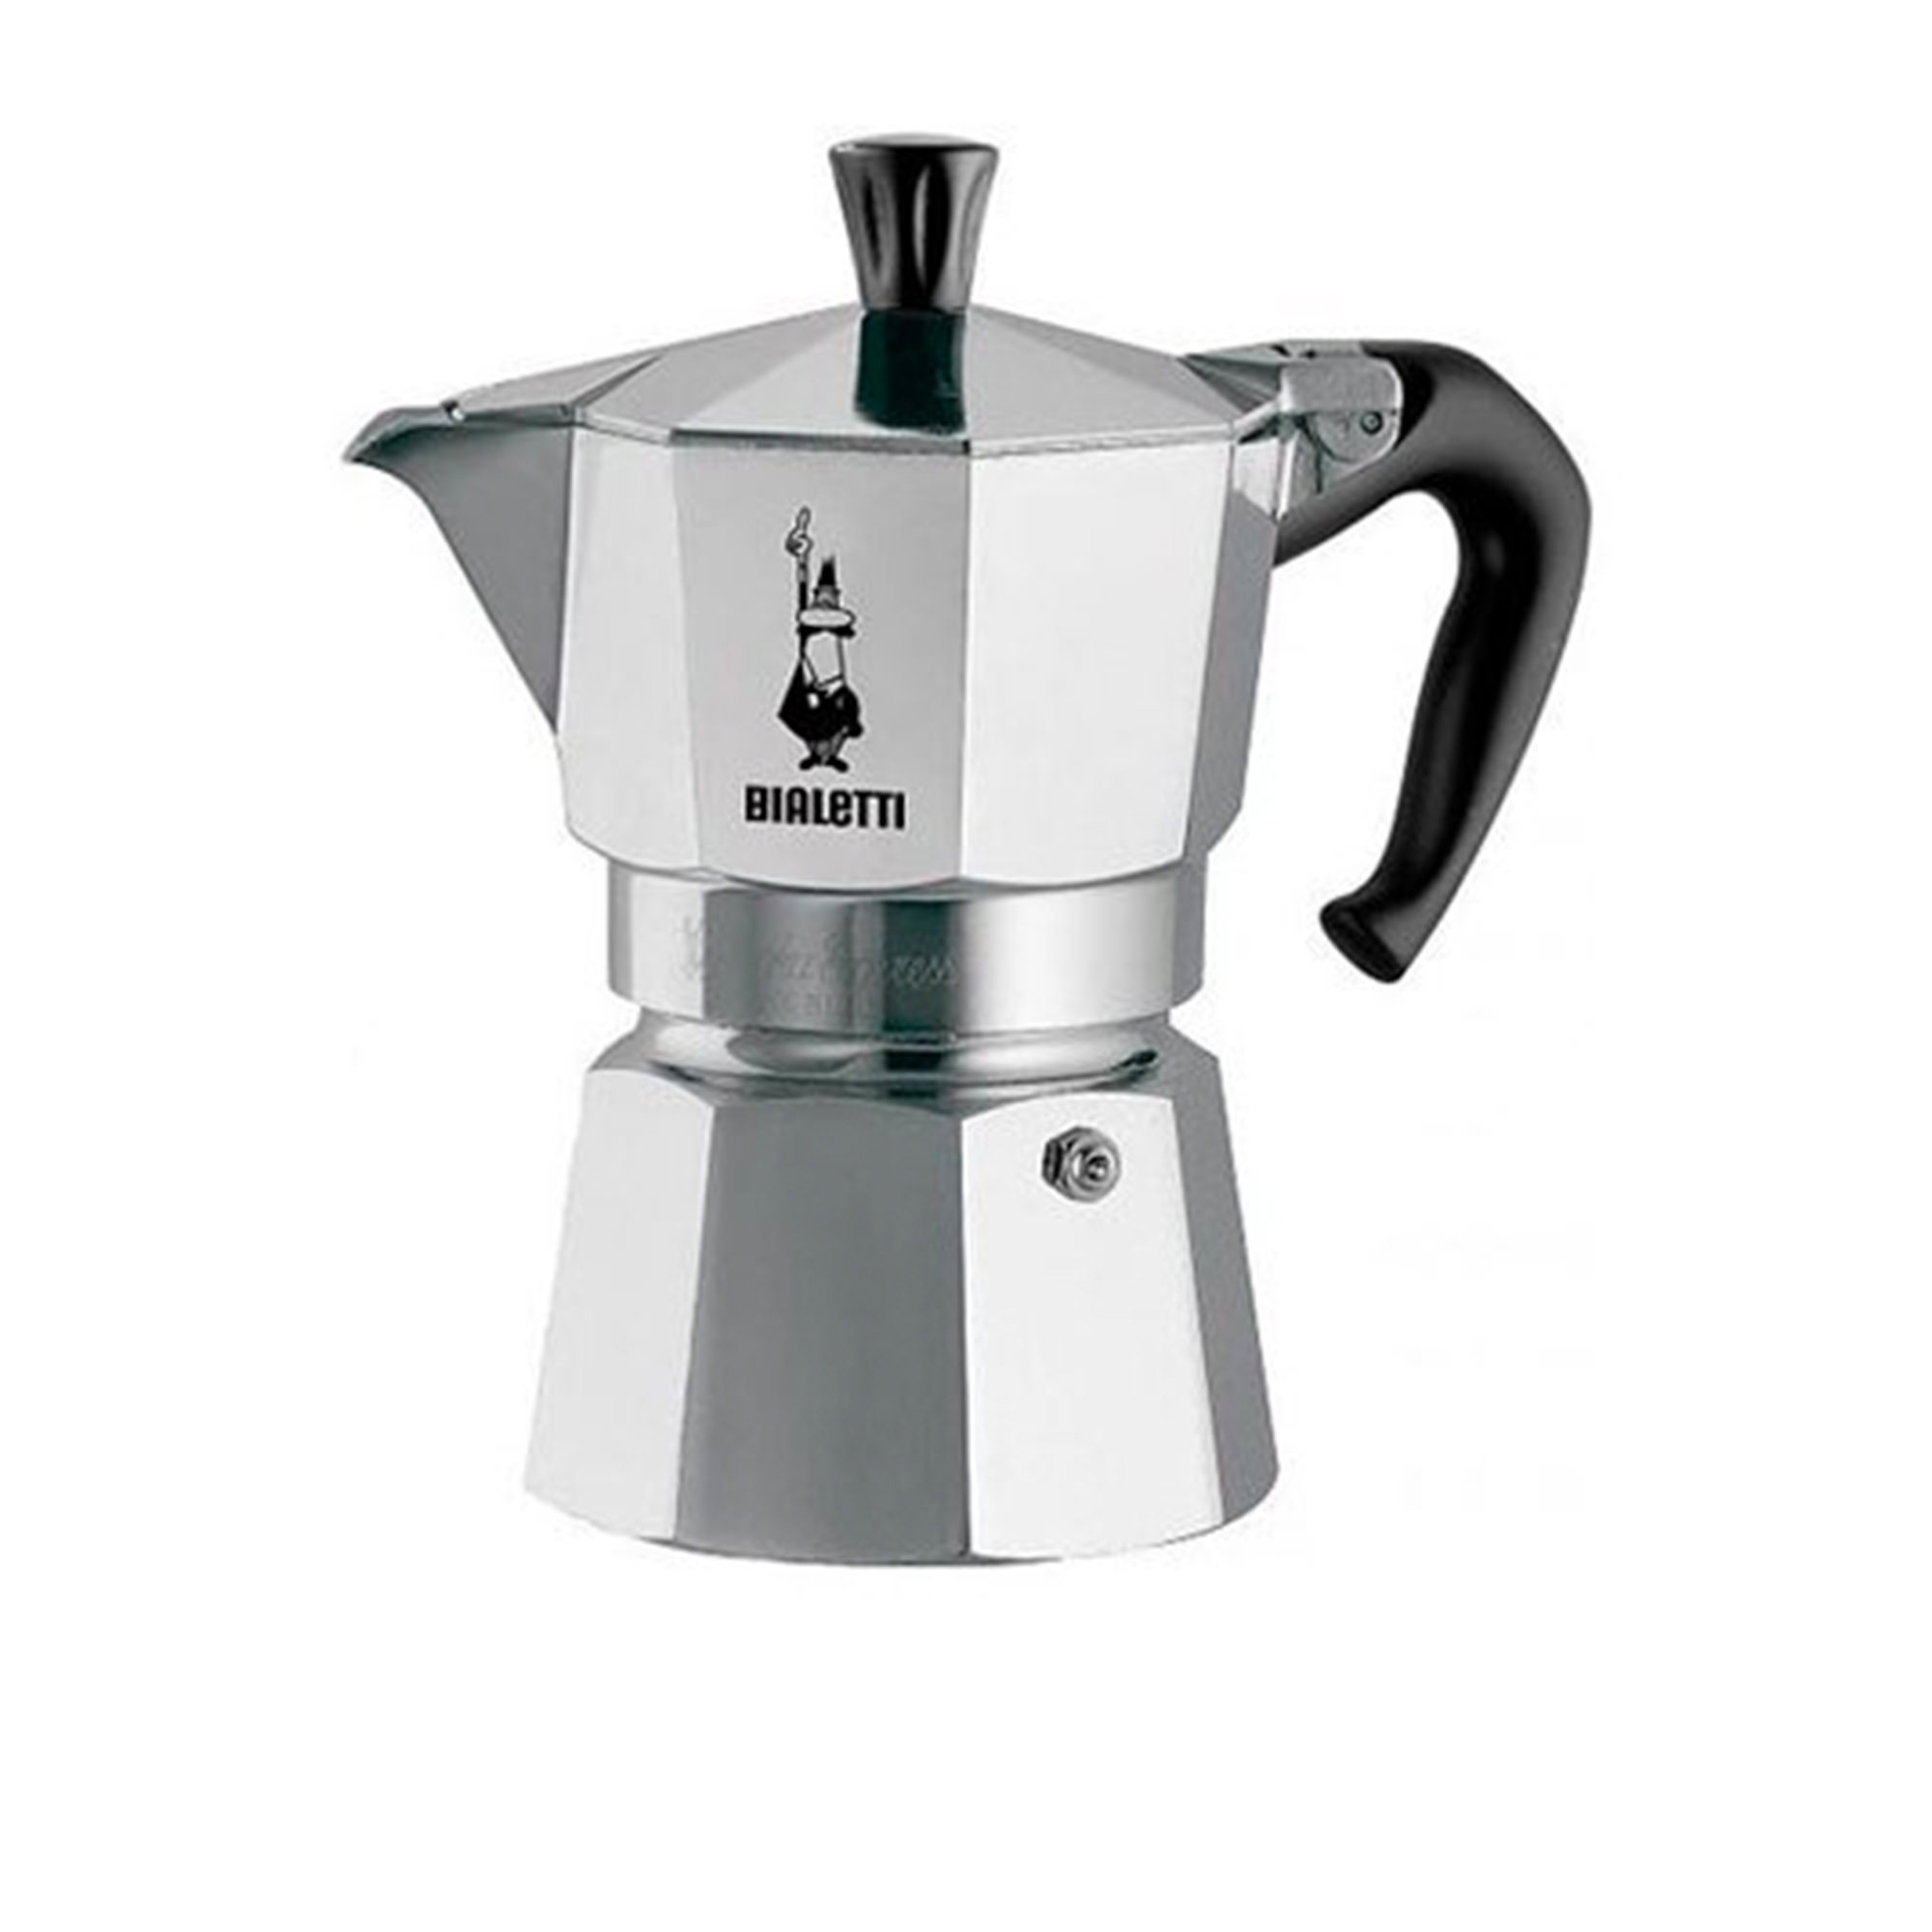 Bialetti Moka Express Stovetop Espresso Maker 6 Cup Image 1